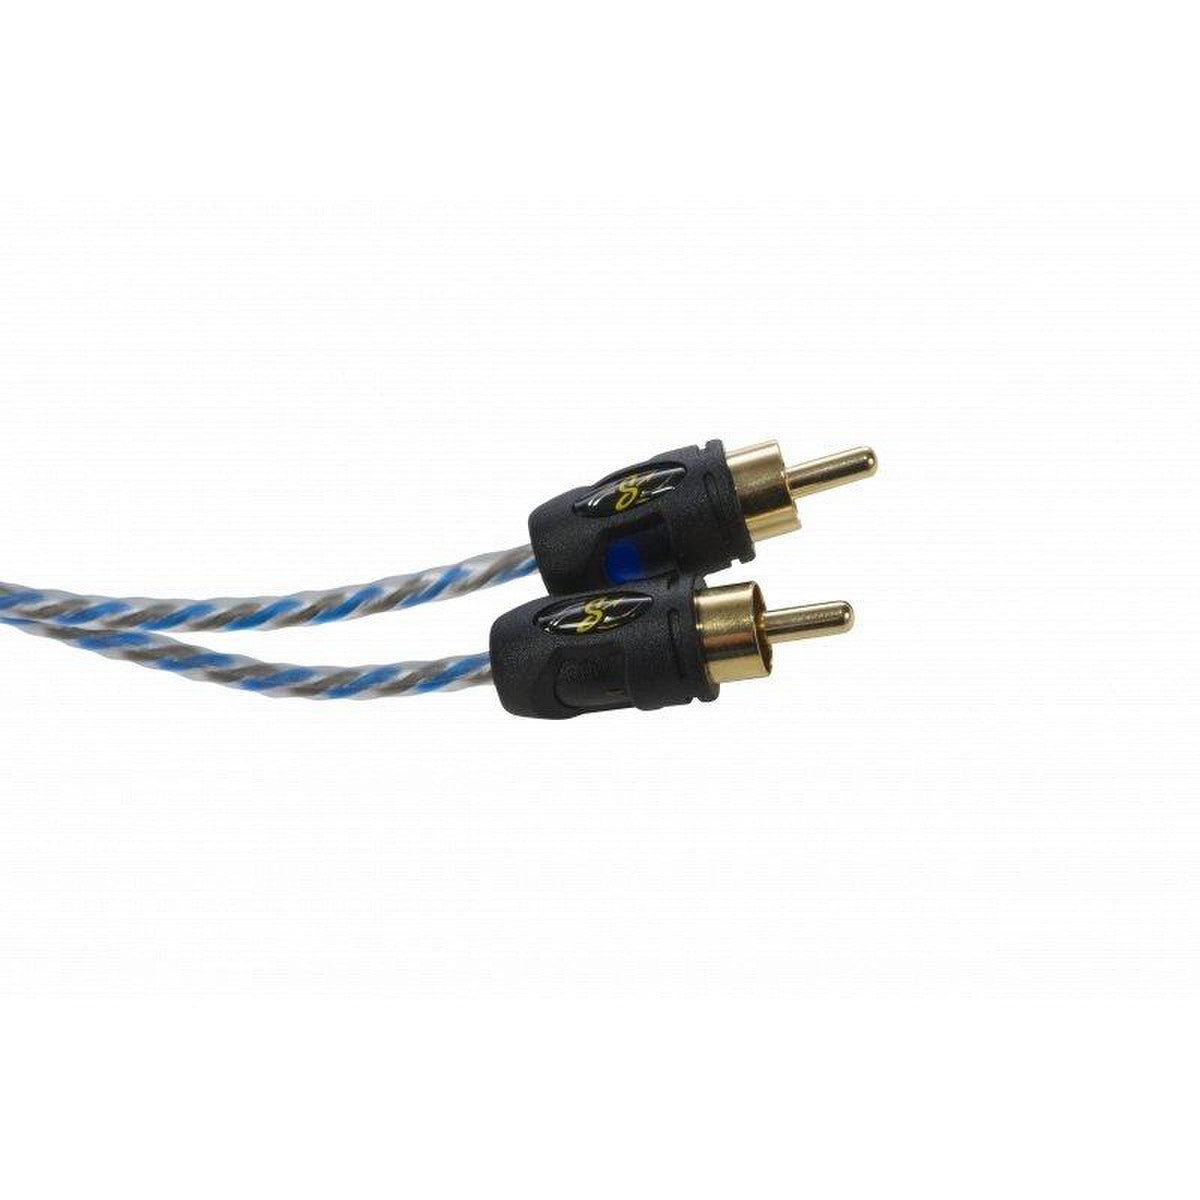 Stinger X1 series rca cables